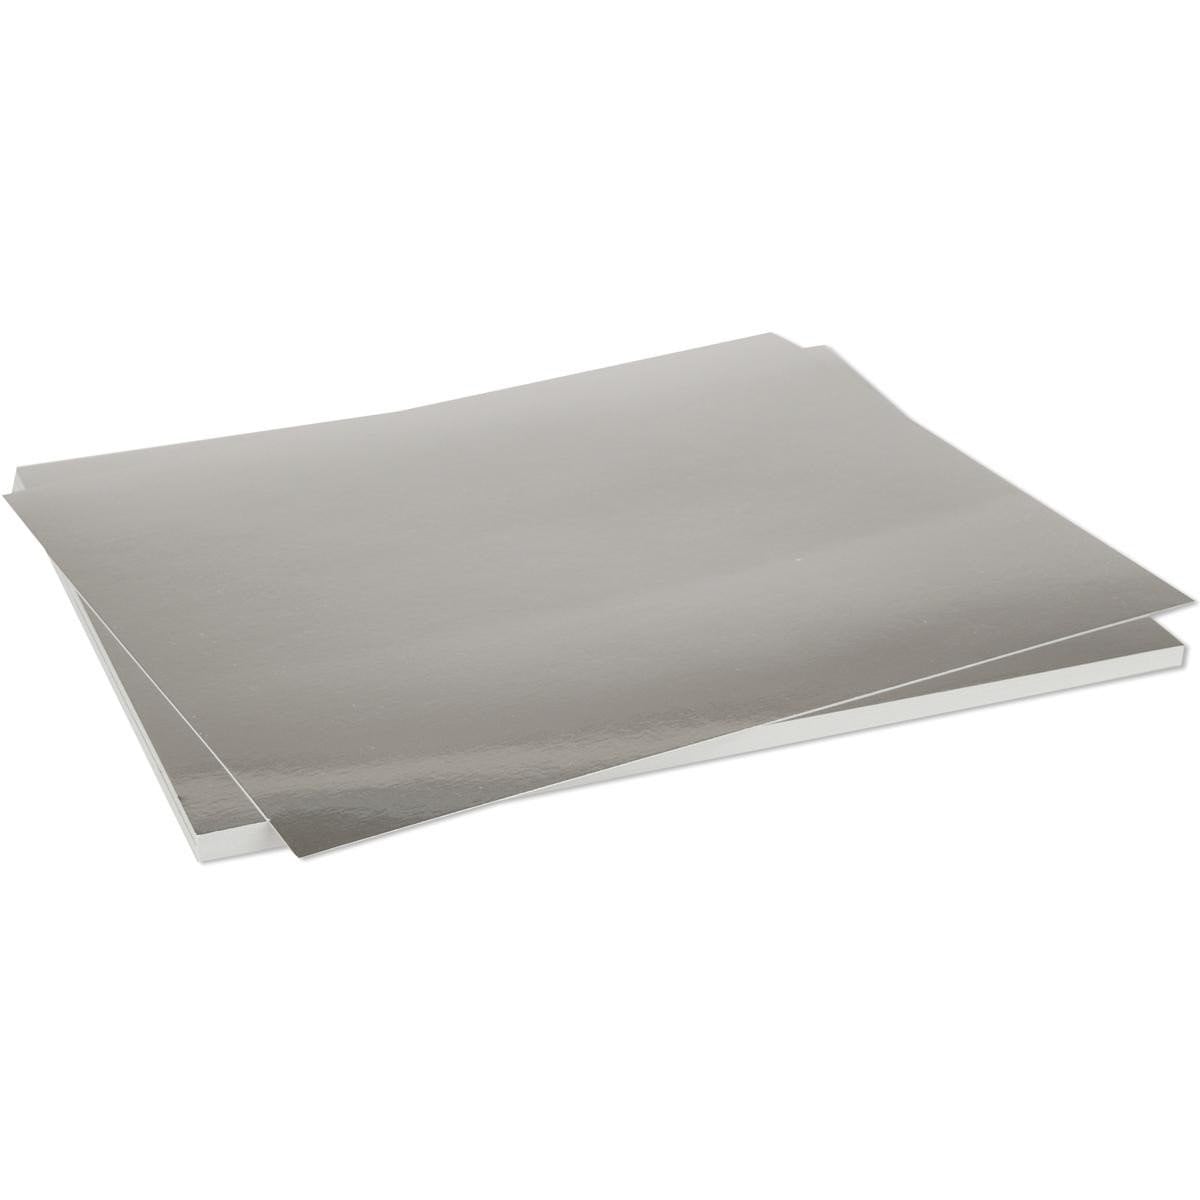 SILVER Foil Cardstock - Bazzill Specialty Paper - 12x12 inch - paper craft foil board